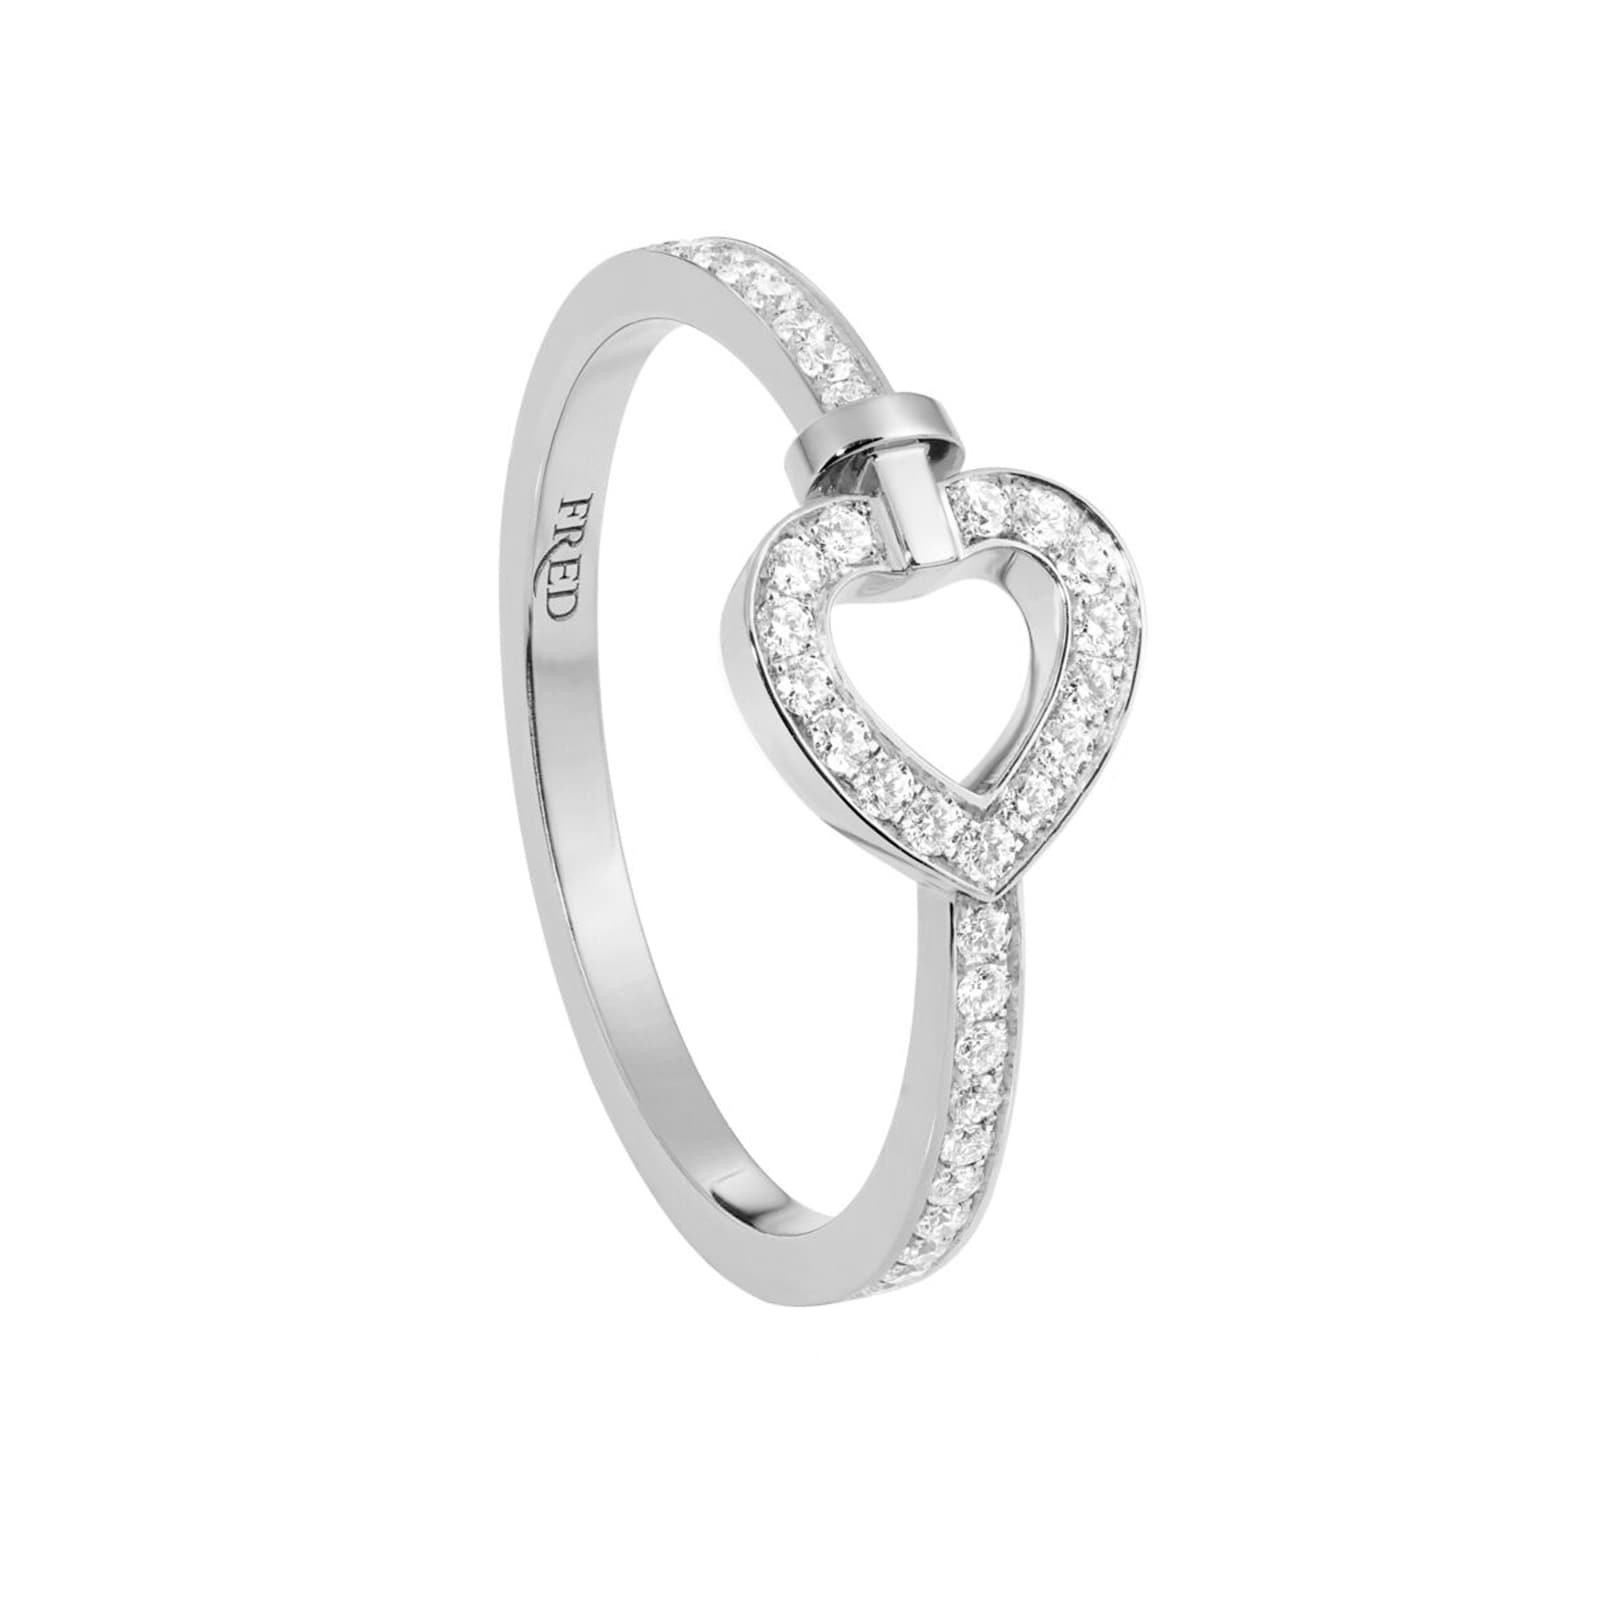 Pretty Woman 18ct White Gold 0.21ct Diamond Ring - Ring Size N